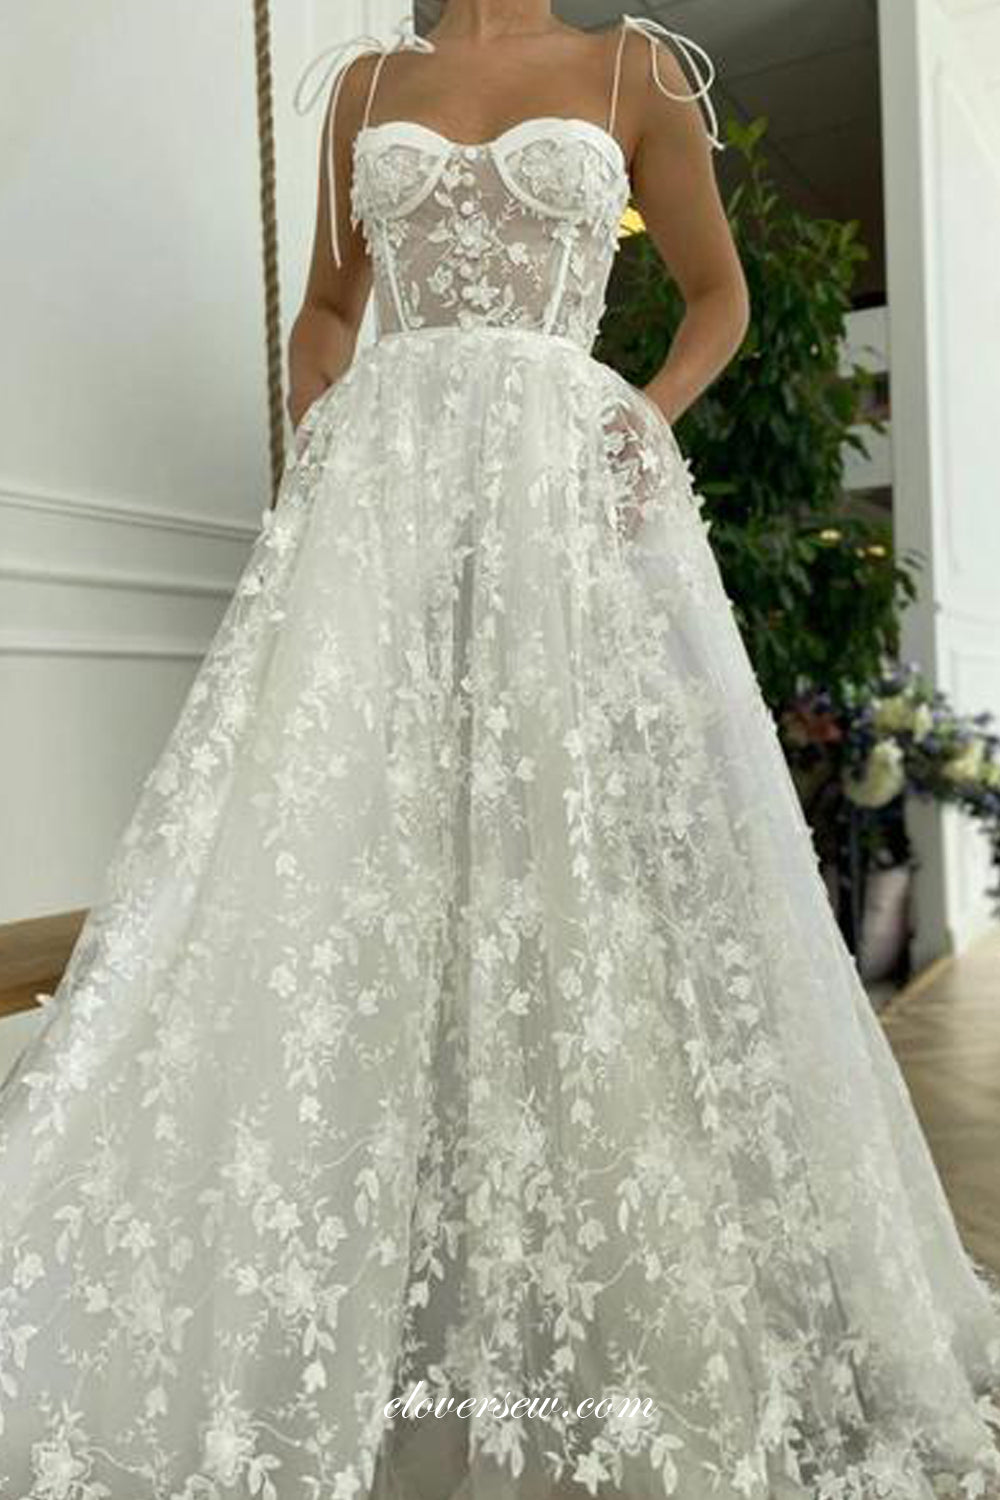 Fashion Lace Illusion Spaghetti Strap French Wedding Dresses, CW0284